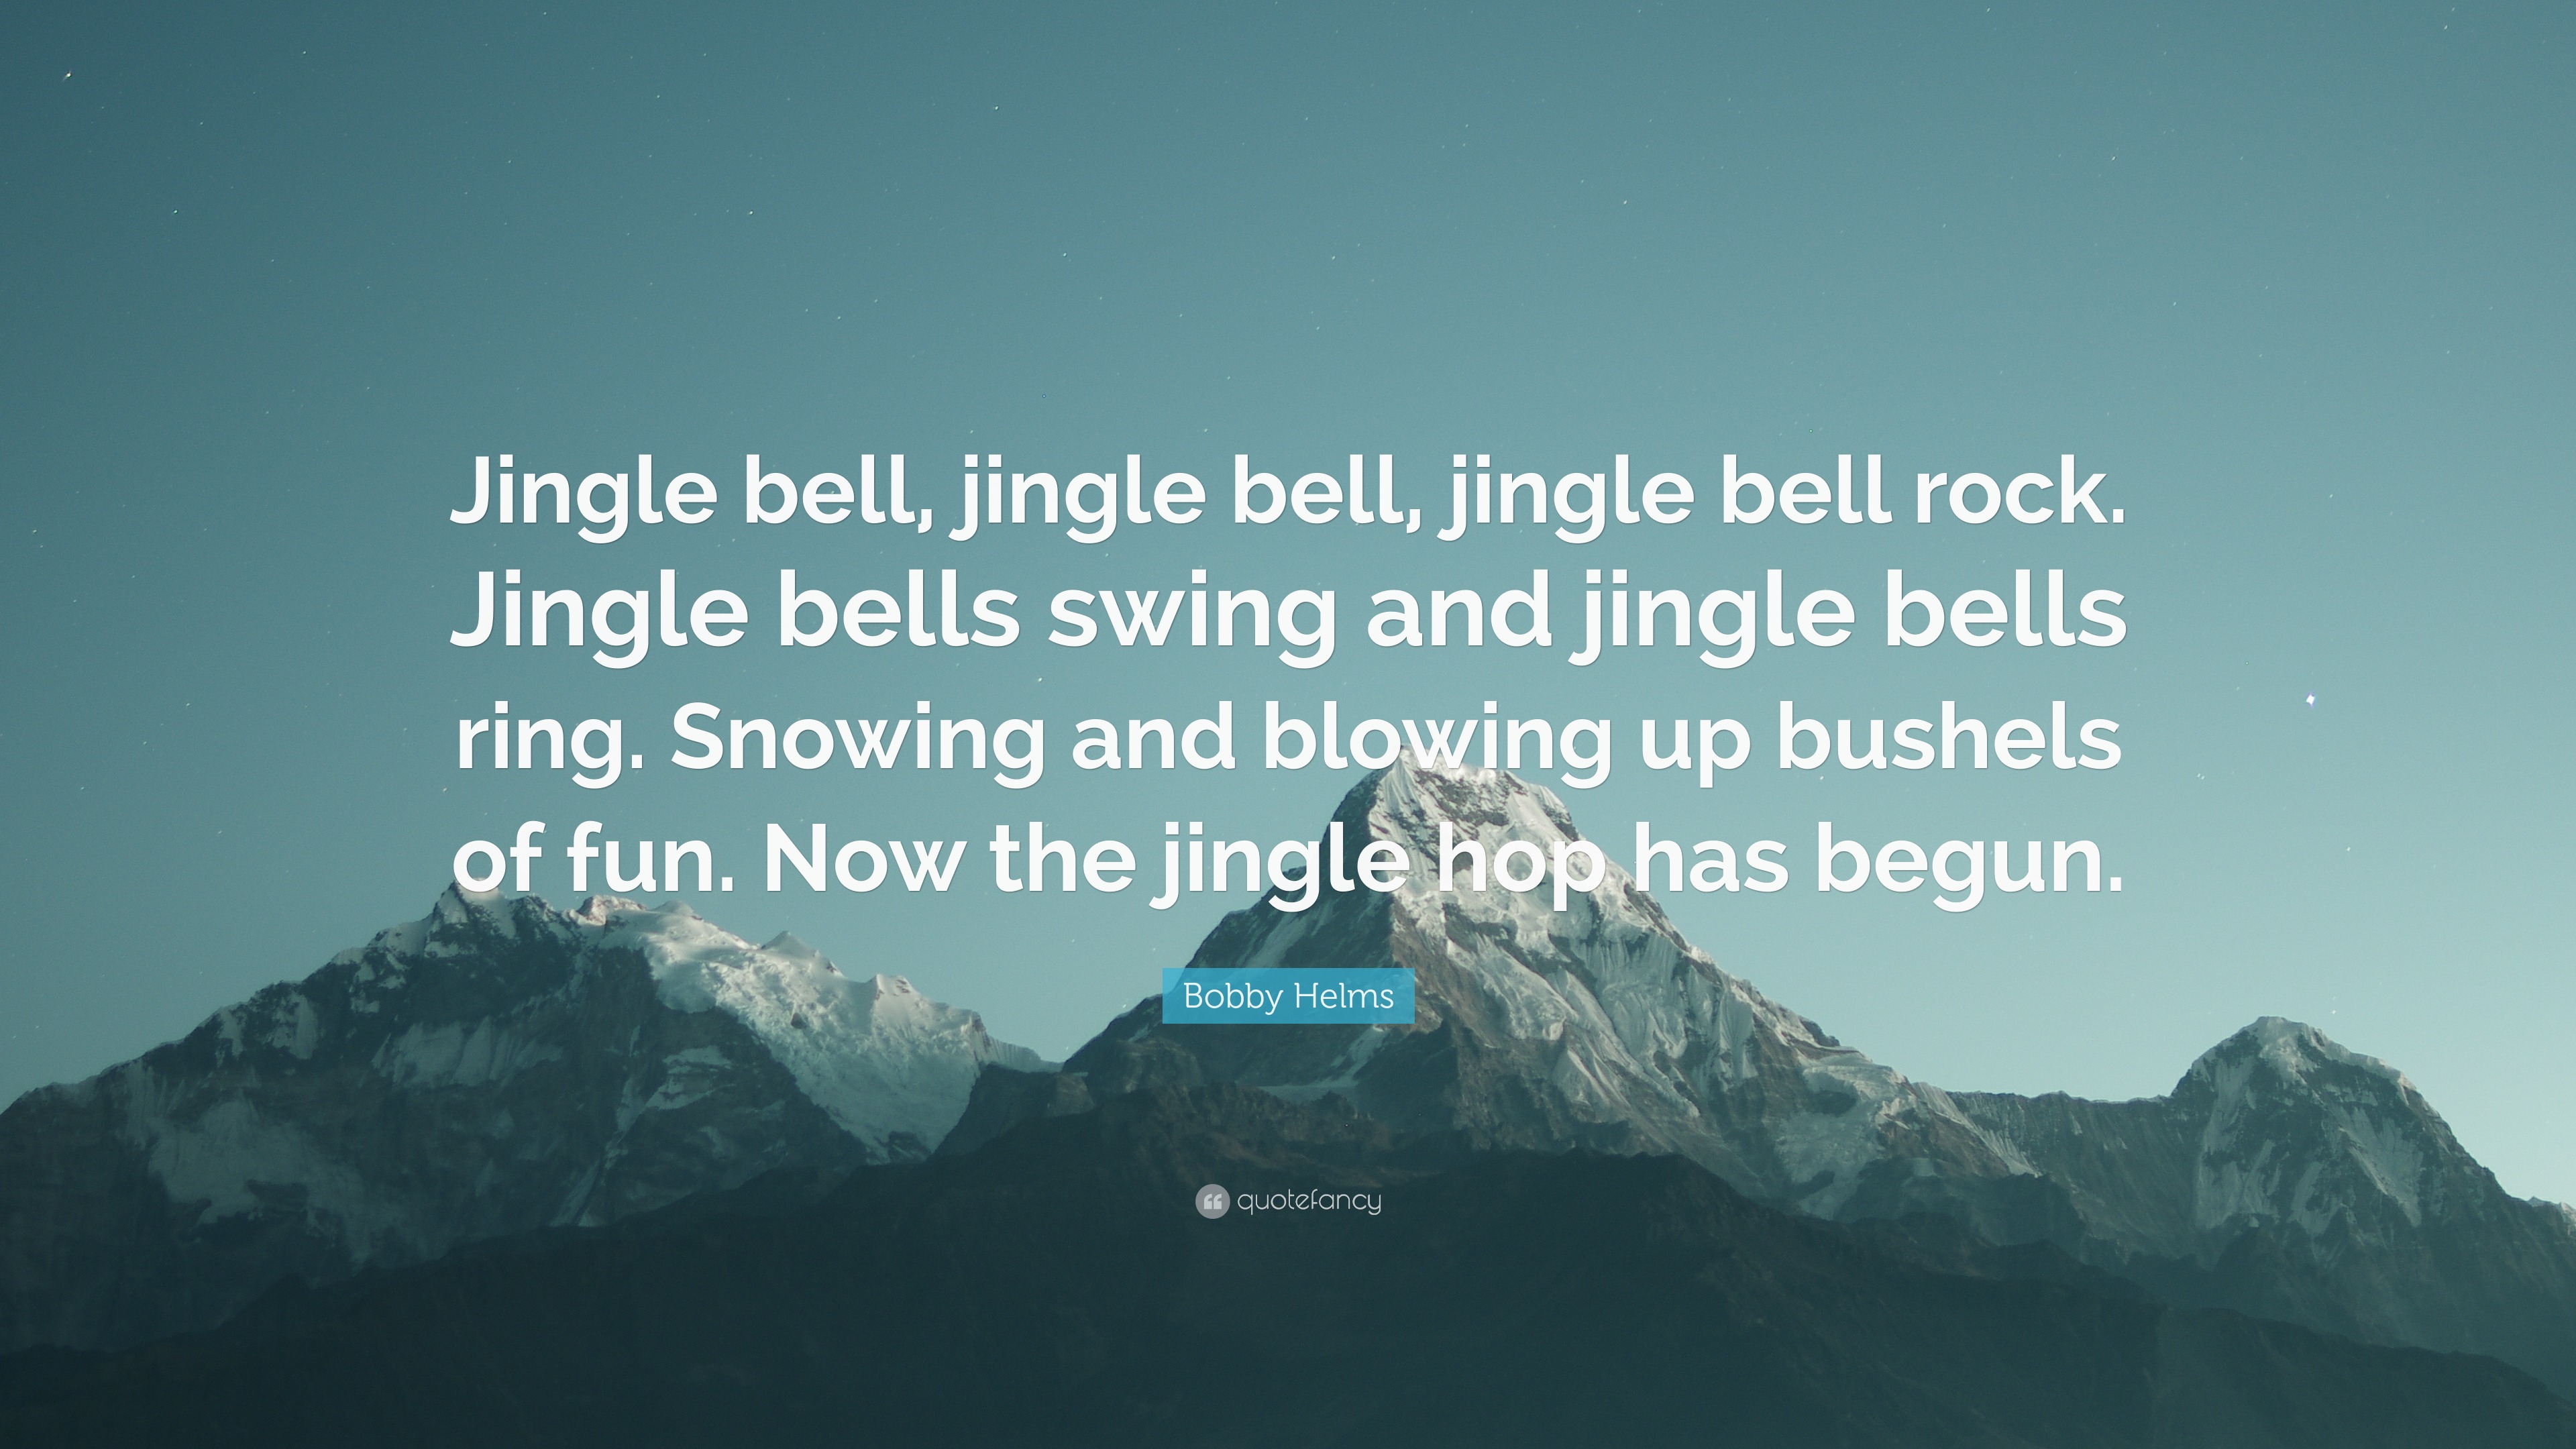 Jingle Bell Rock Lyrics